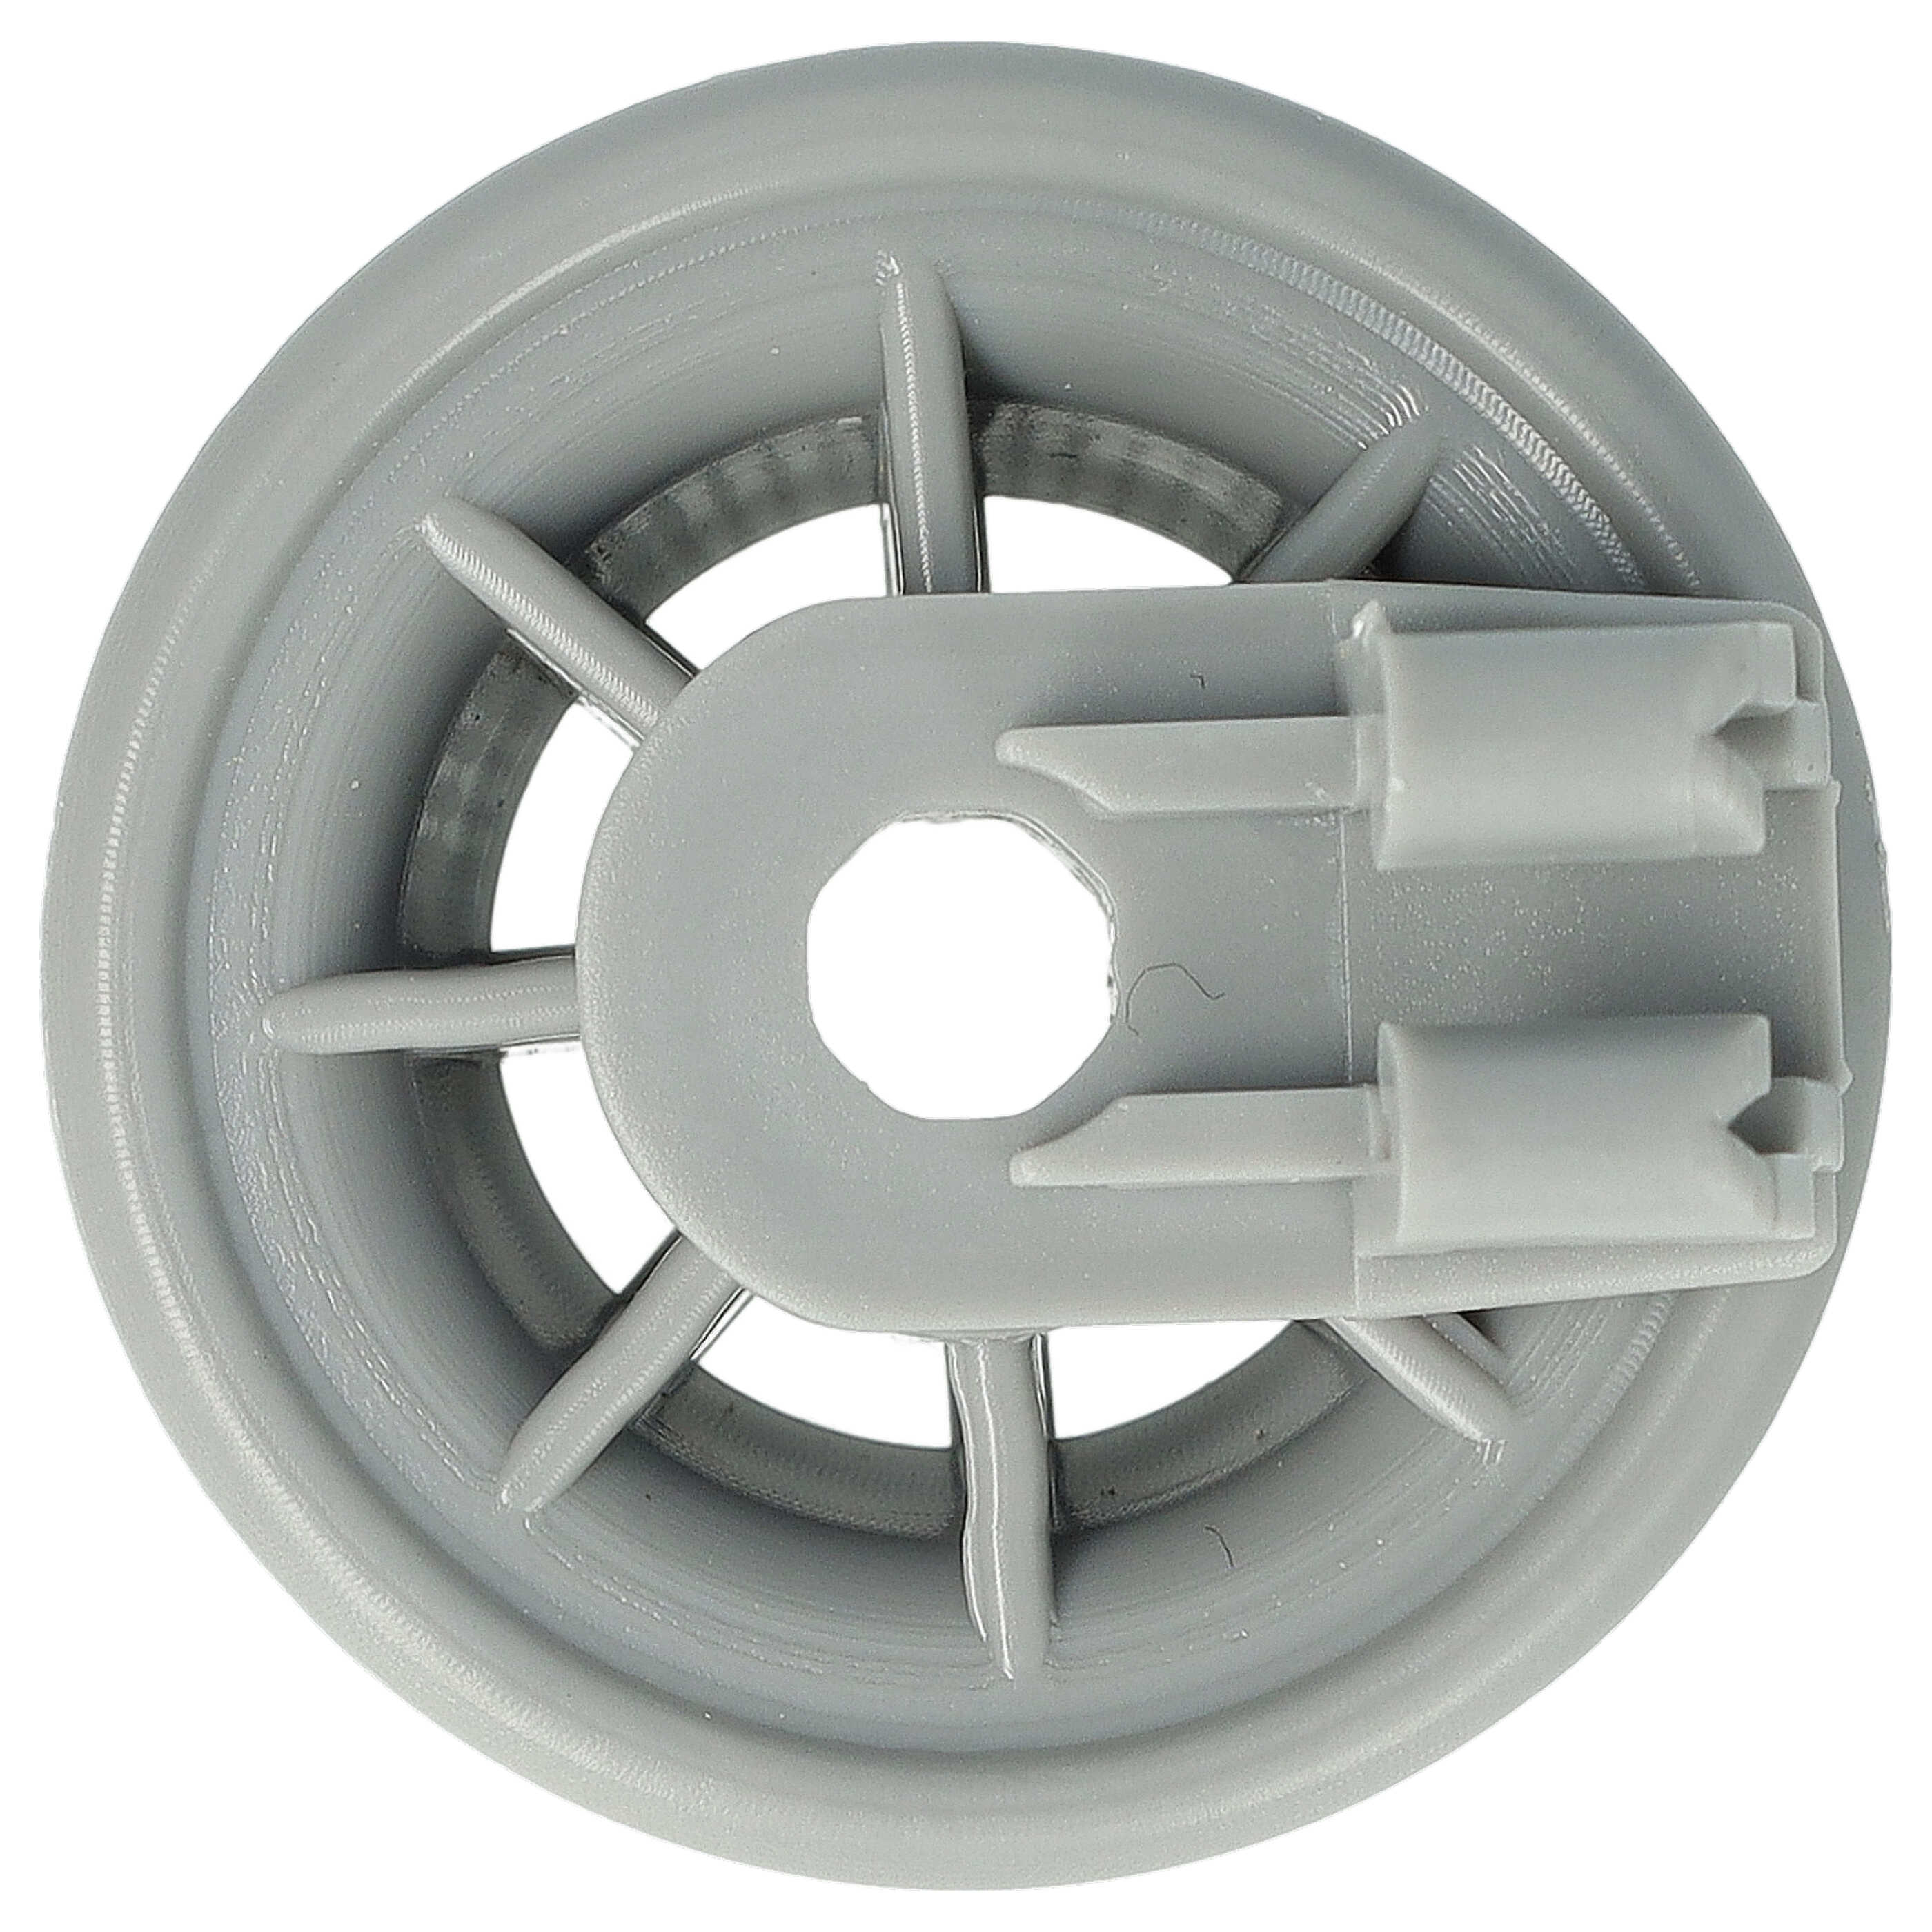 8x Lower Basket Wheel Diameter 35 mm replaces Bosch 00170838, 00183955, 00170834 for Hanseatic Dishwasher